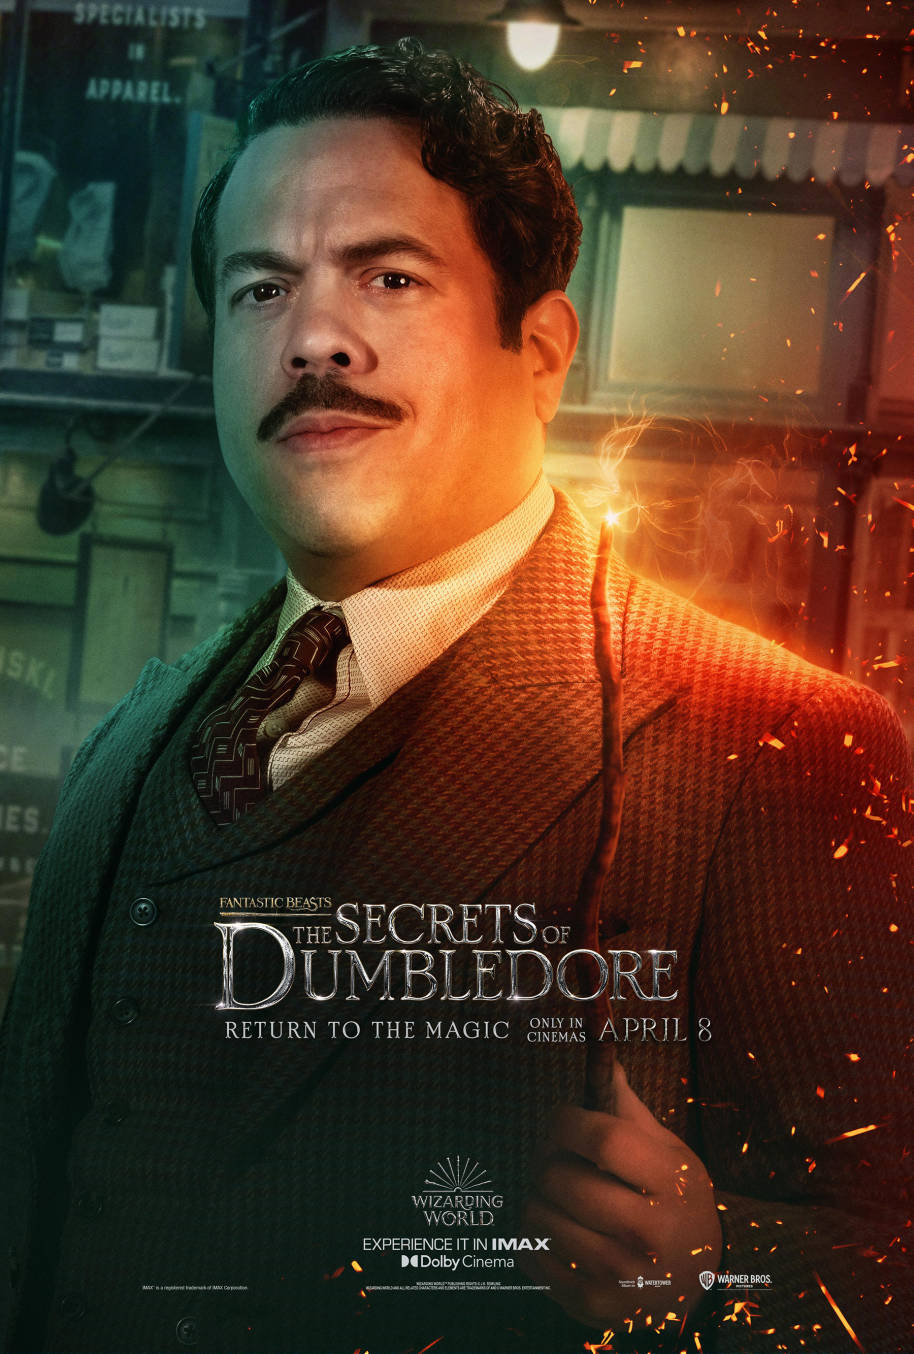 Dan Fogler as Jacob Kowalski in the poster for Fantastic Beasts: The Secrets of Dumbledore.